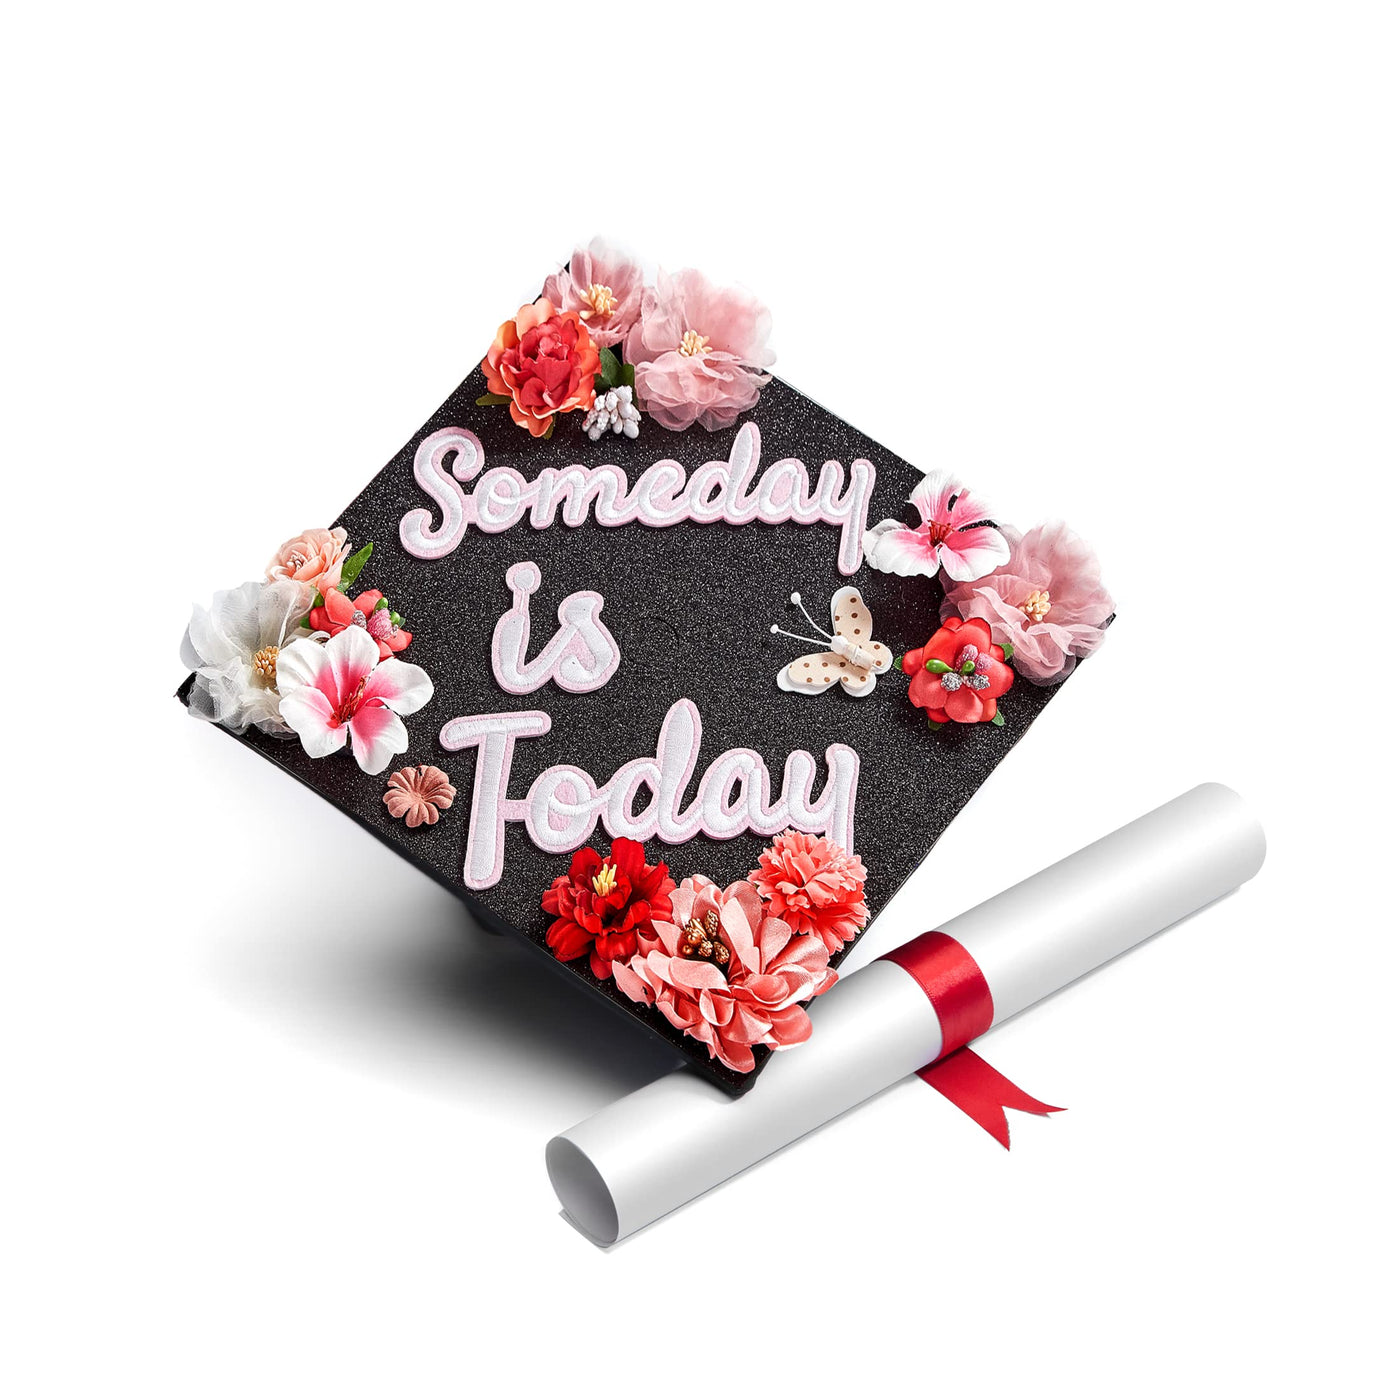 Handmade Graduation Cap Topper, Graduation Cap Decorations, Someday Is Today